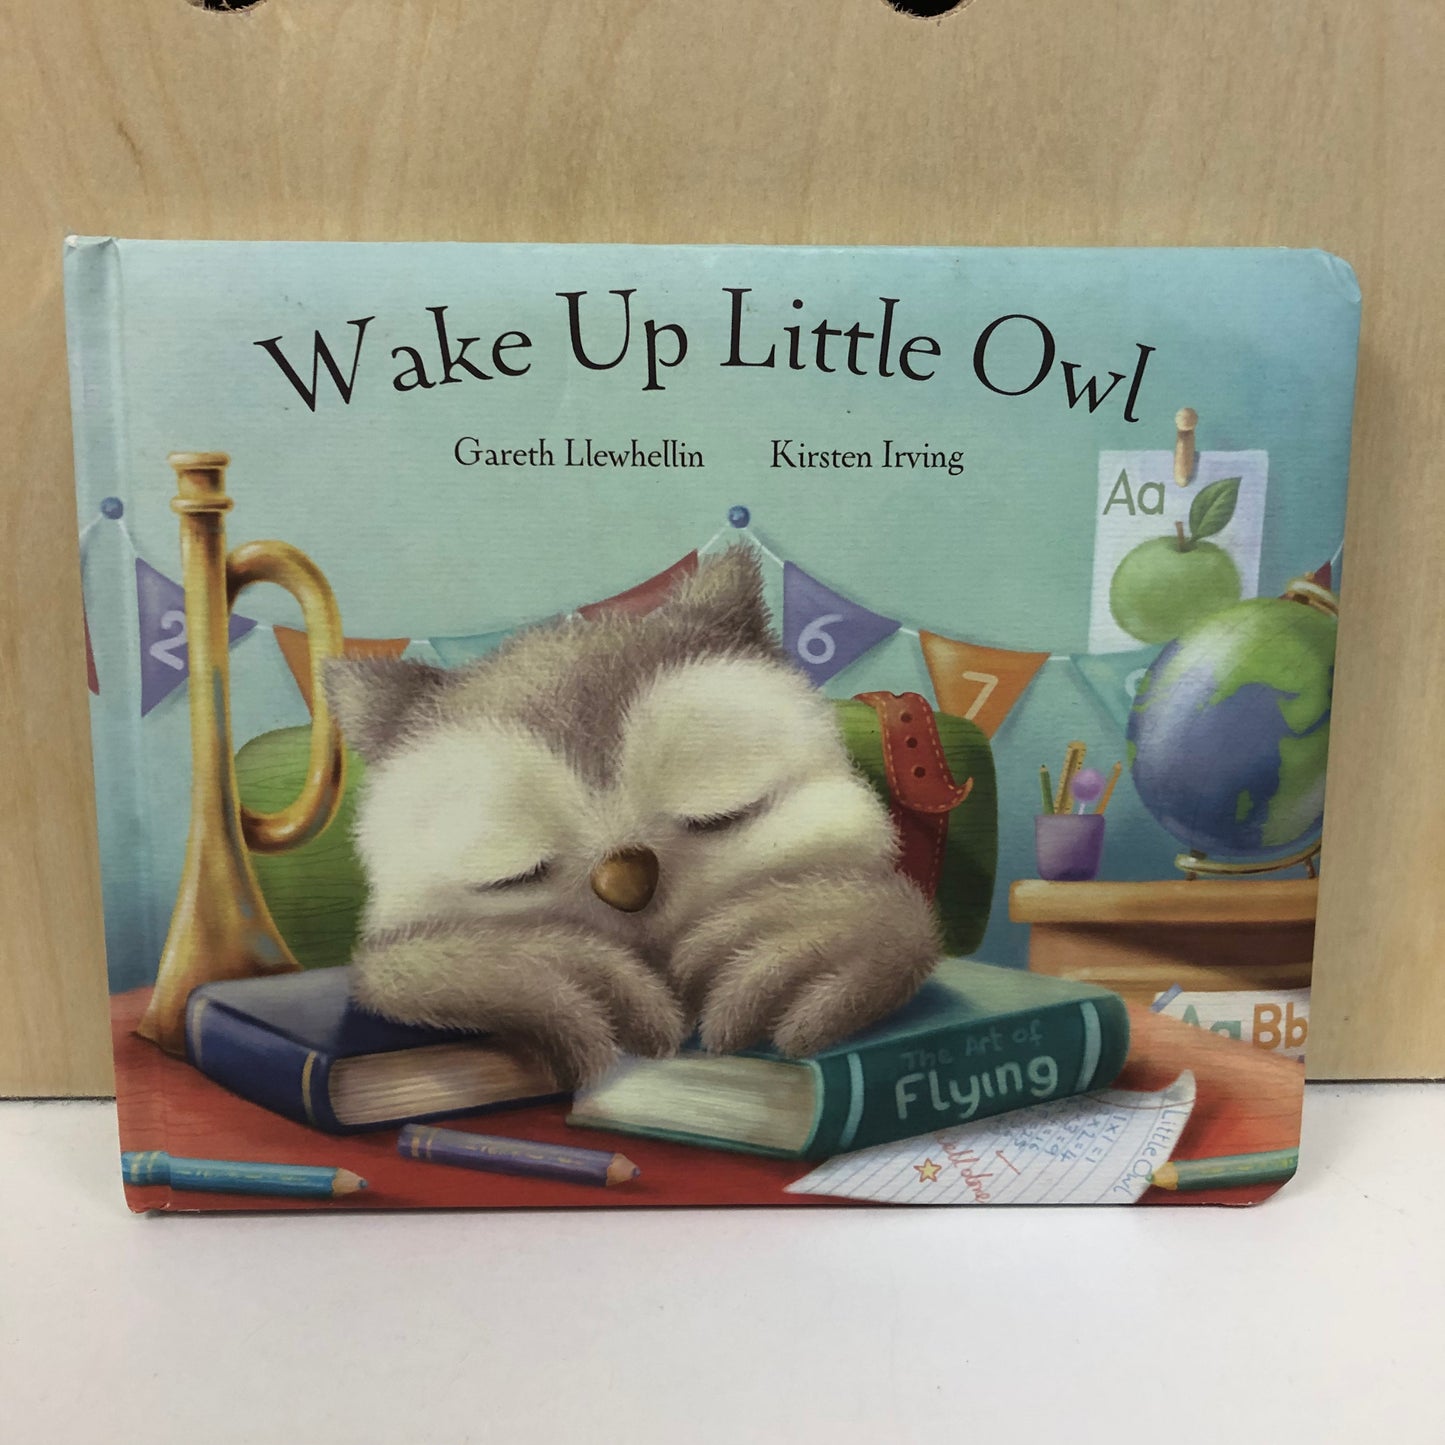 Wake Up Little Owl